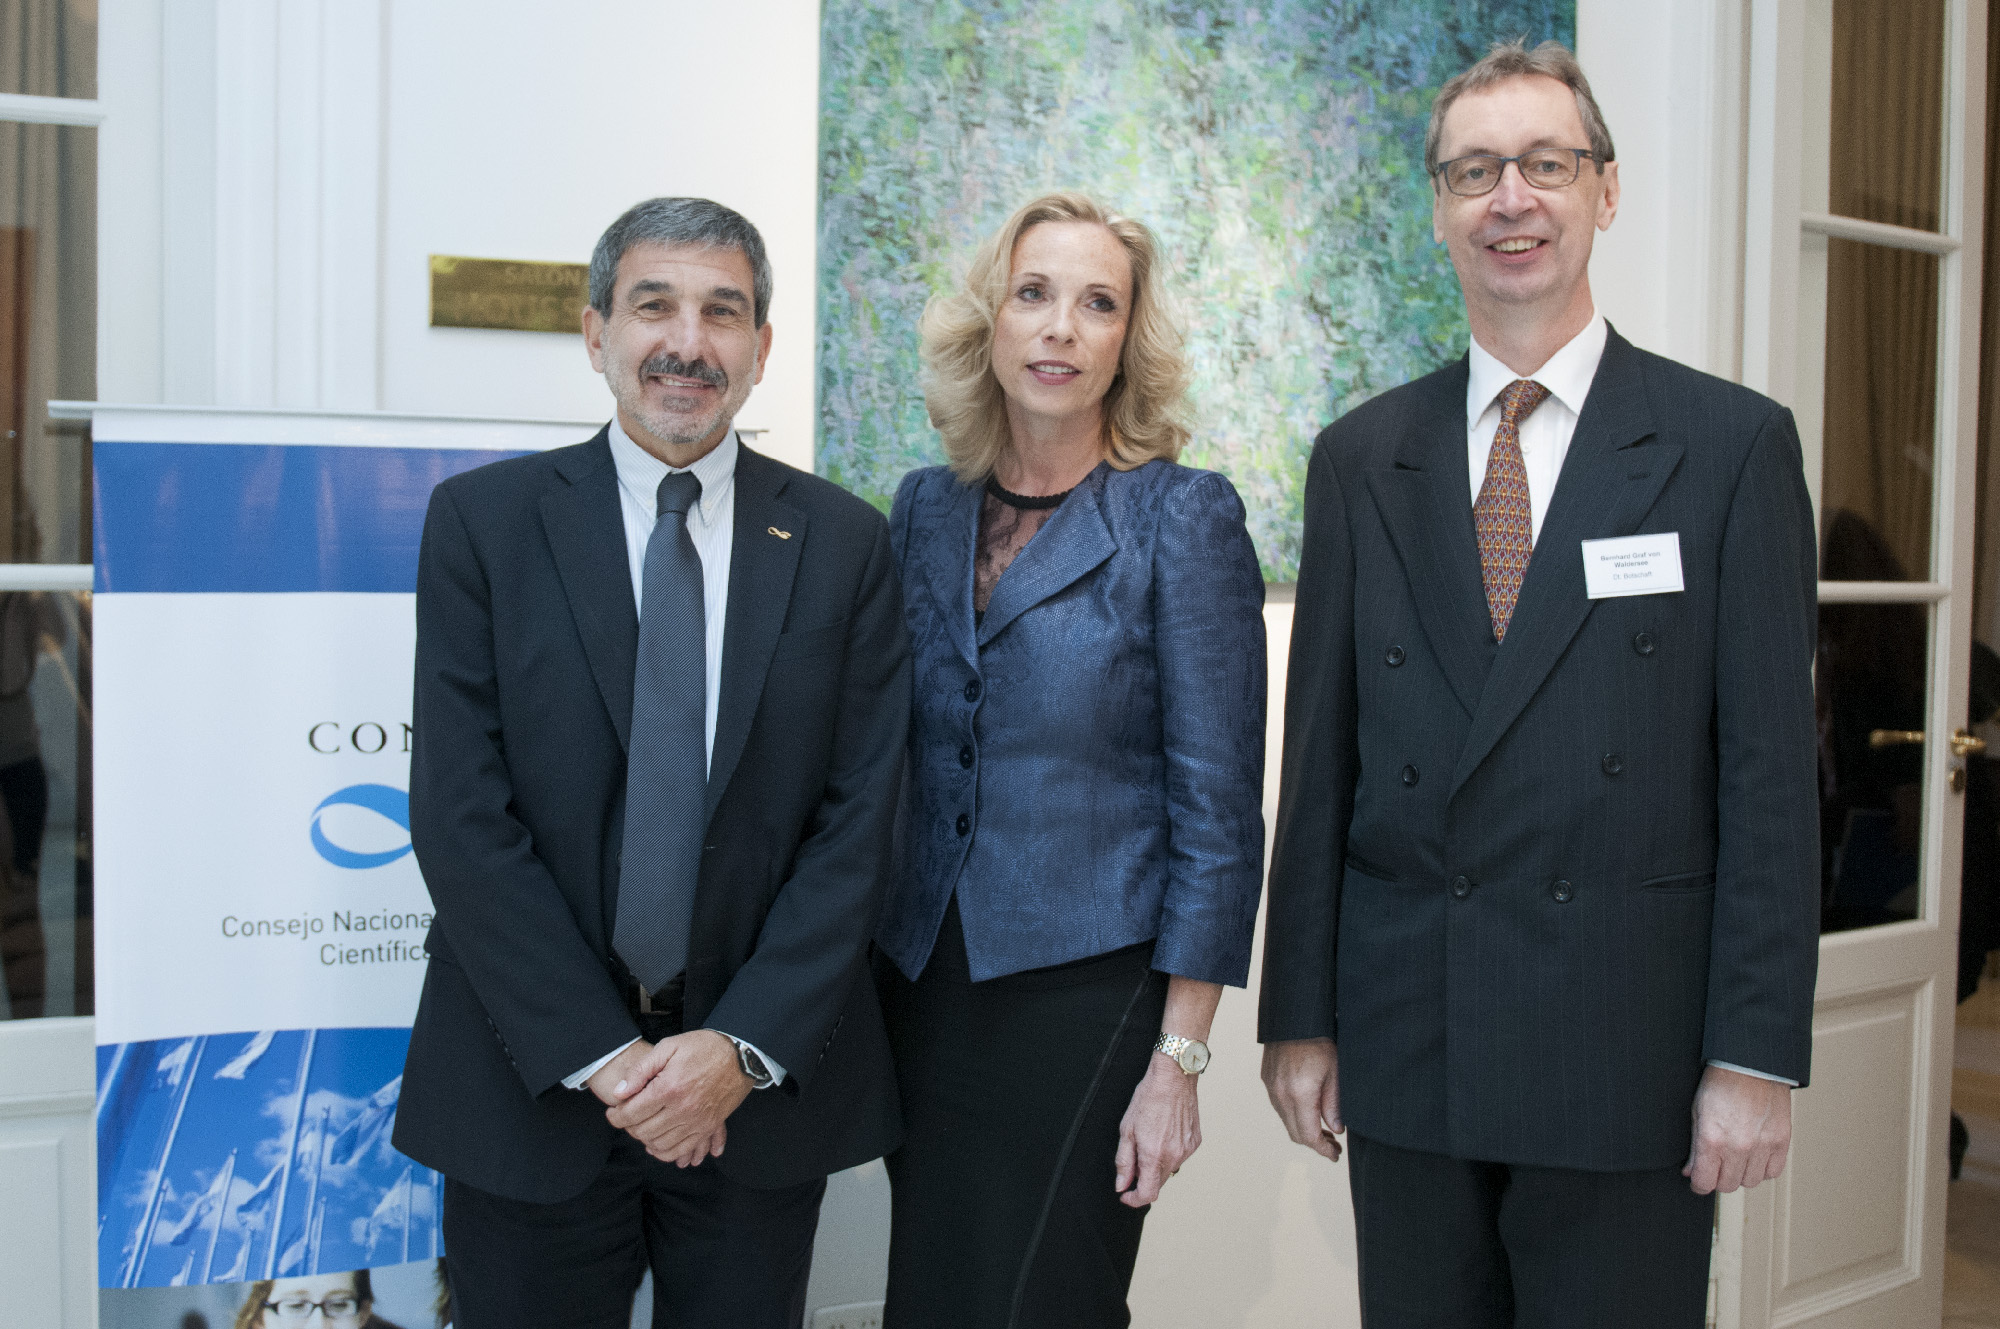 Roberto Carlos Salvarezza, Dorothee Dzwonnek and Bernhard Graf von Waldersee at the inauguration of the Research Training Group.